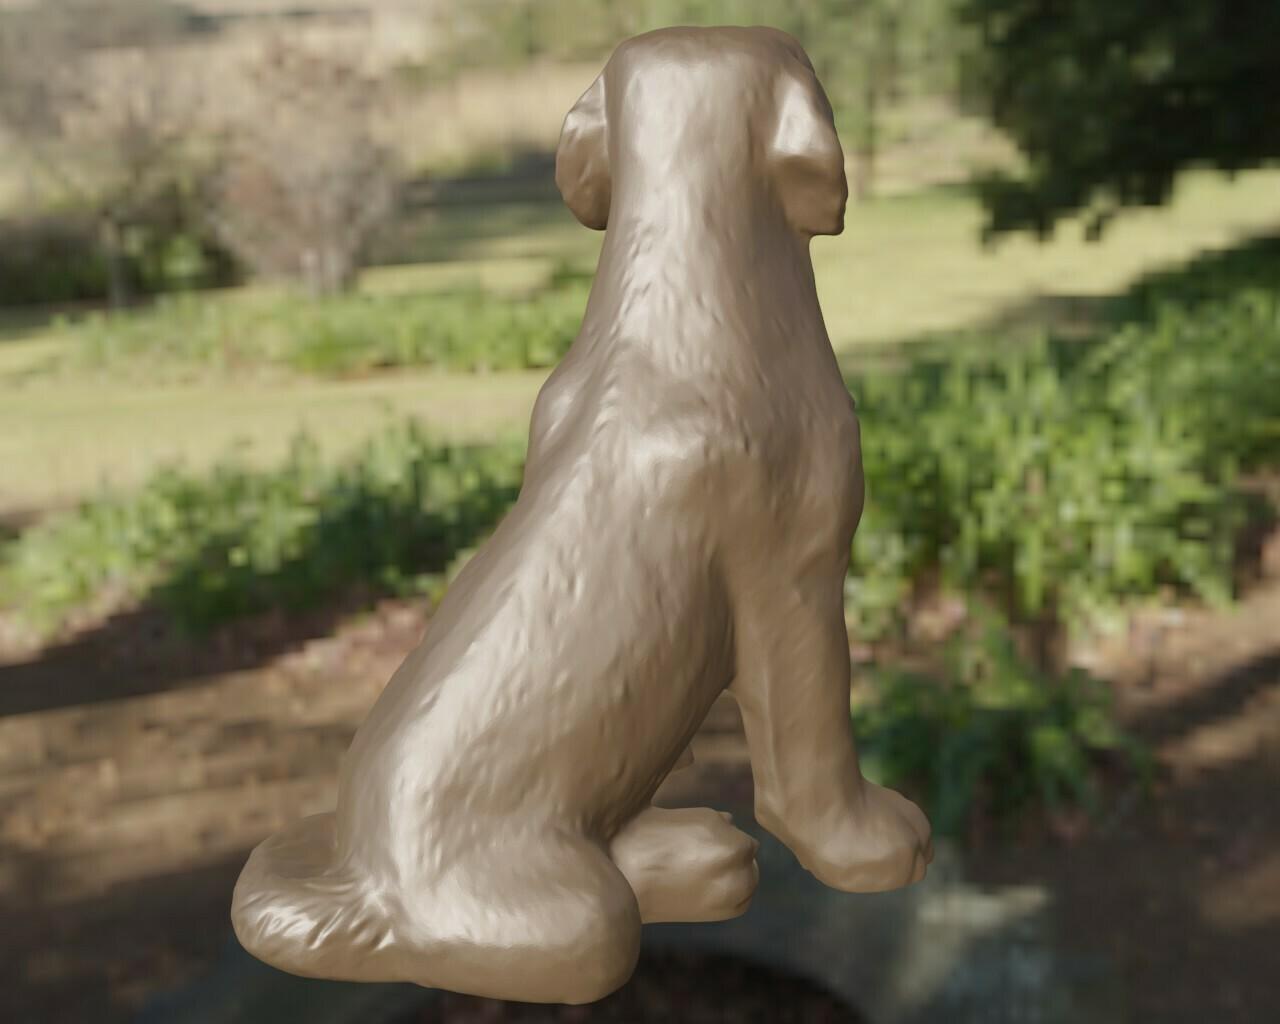 Labrador 3d model